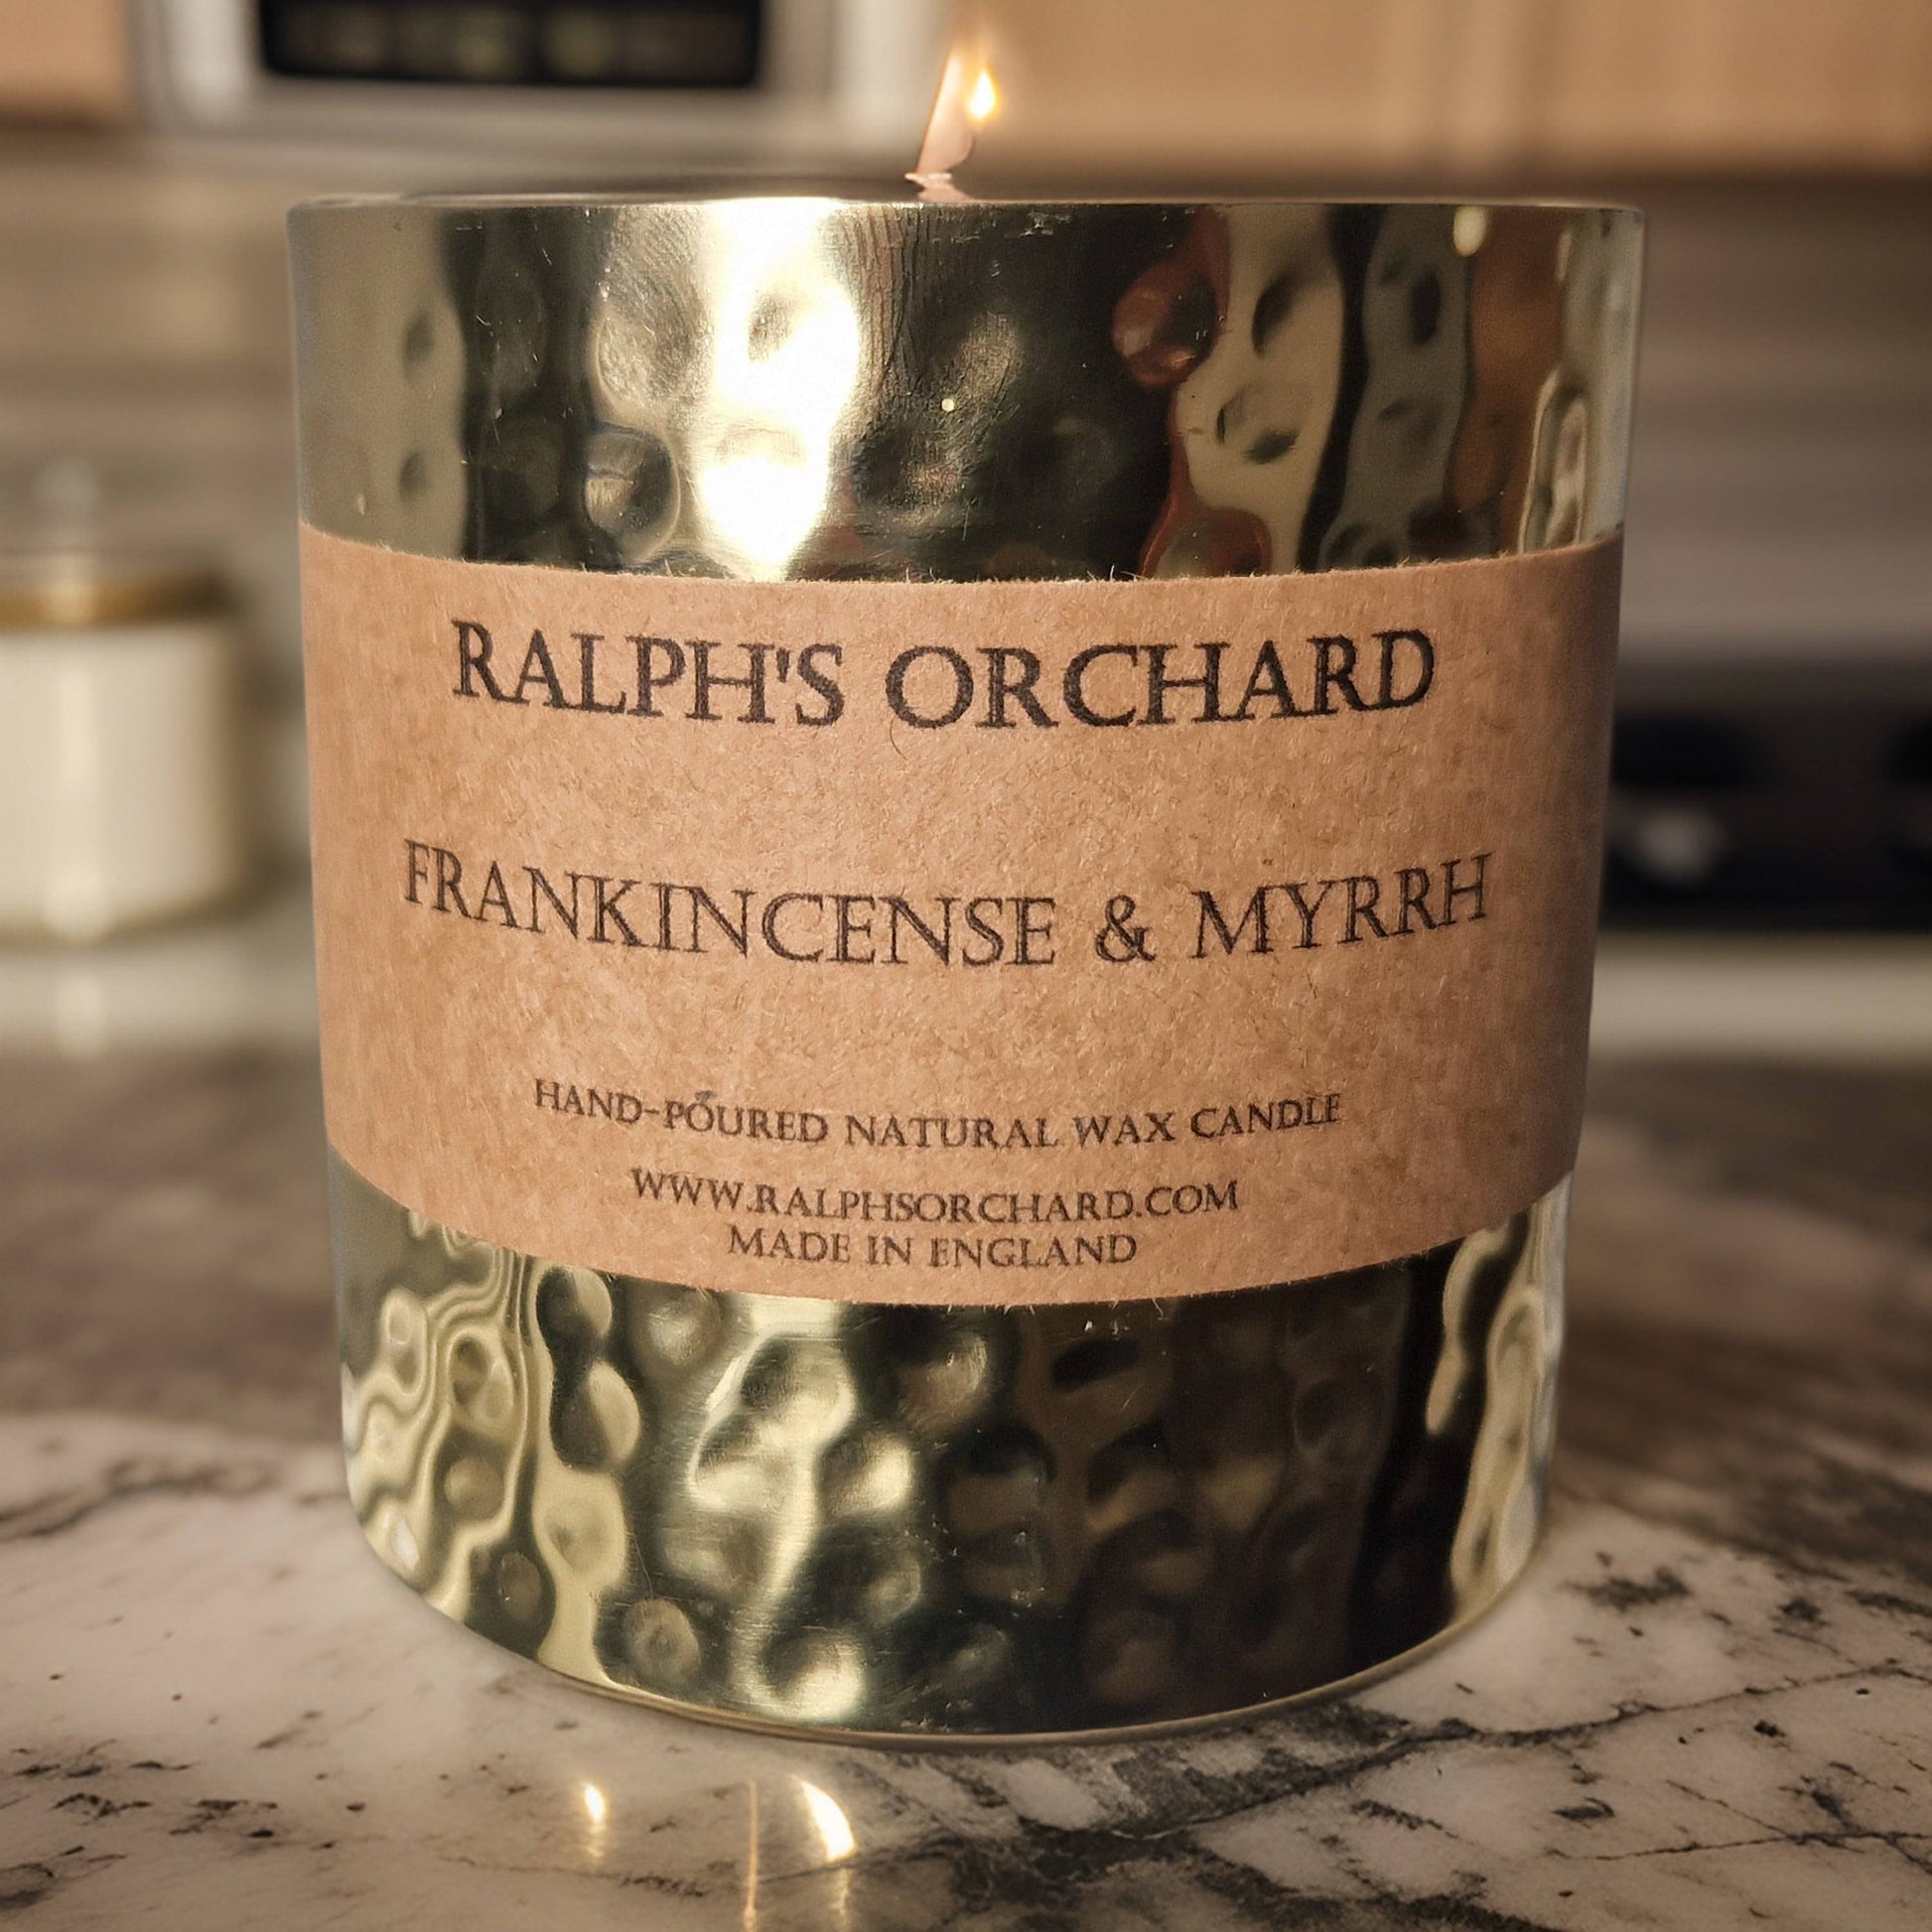 Frankincense & Myrrh candle in gold